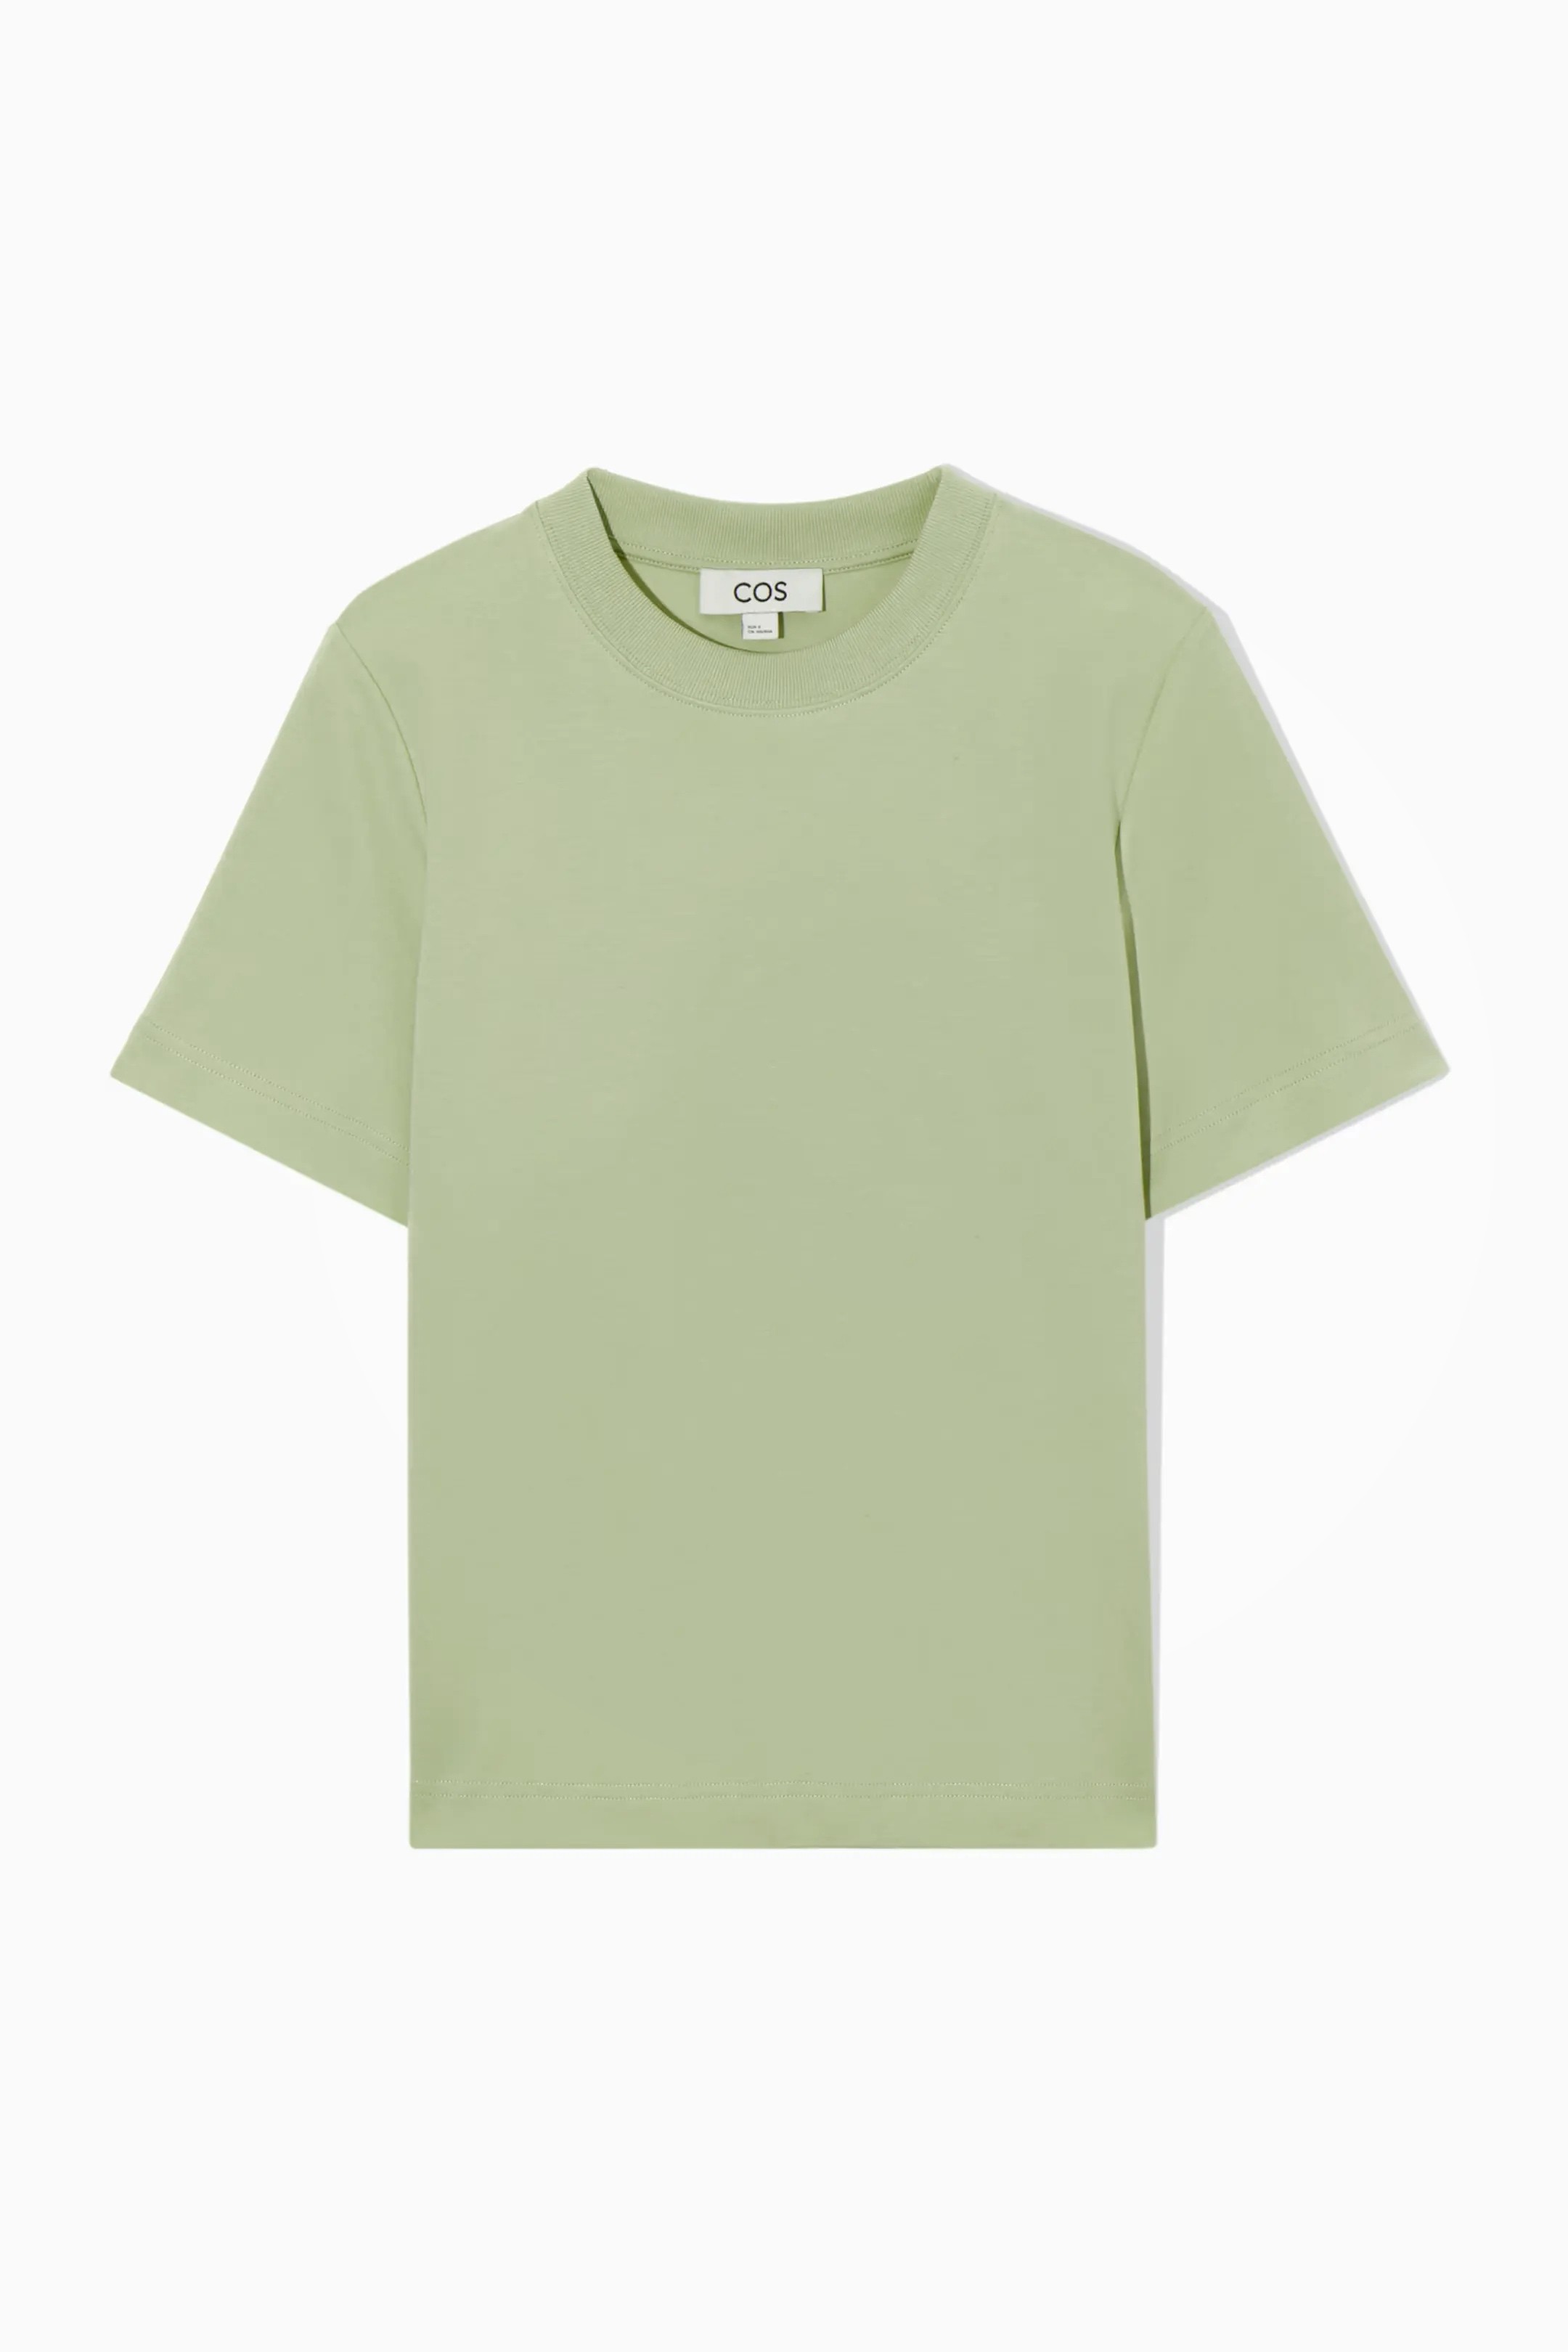 COS %100 Pamuk Tshirt - Su Yeşili